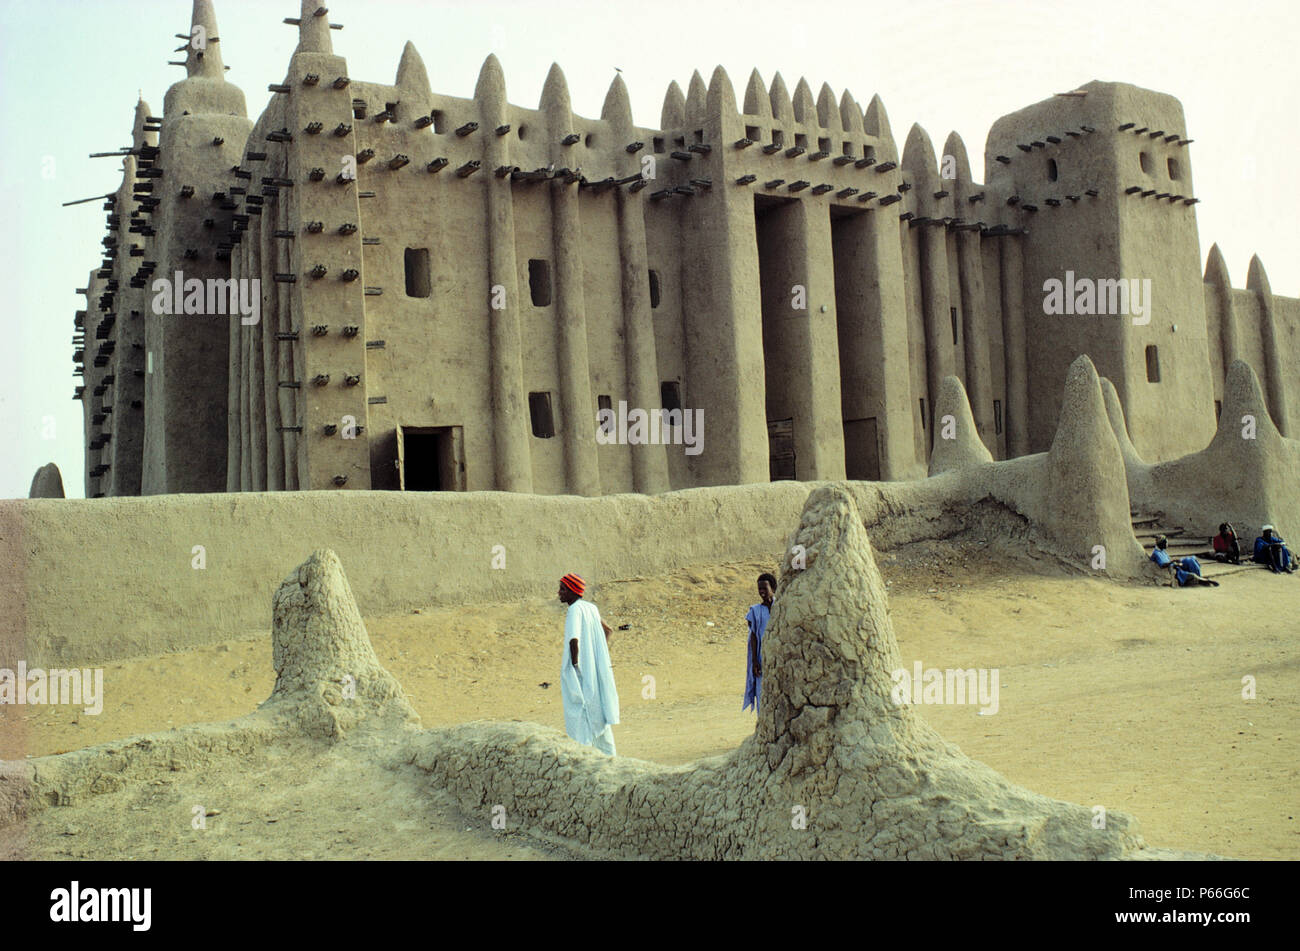 Barro tradicional arquitectura - Gran mezquita - ciudad de Djenne - Malí Foto de stock